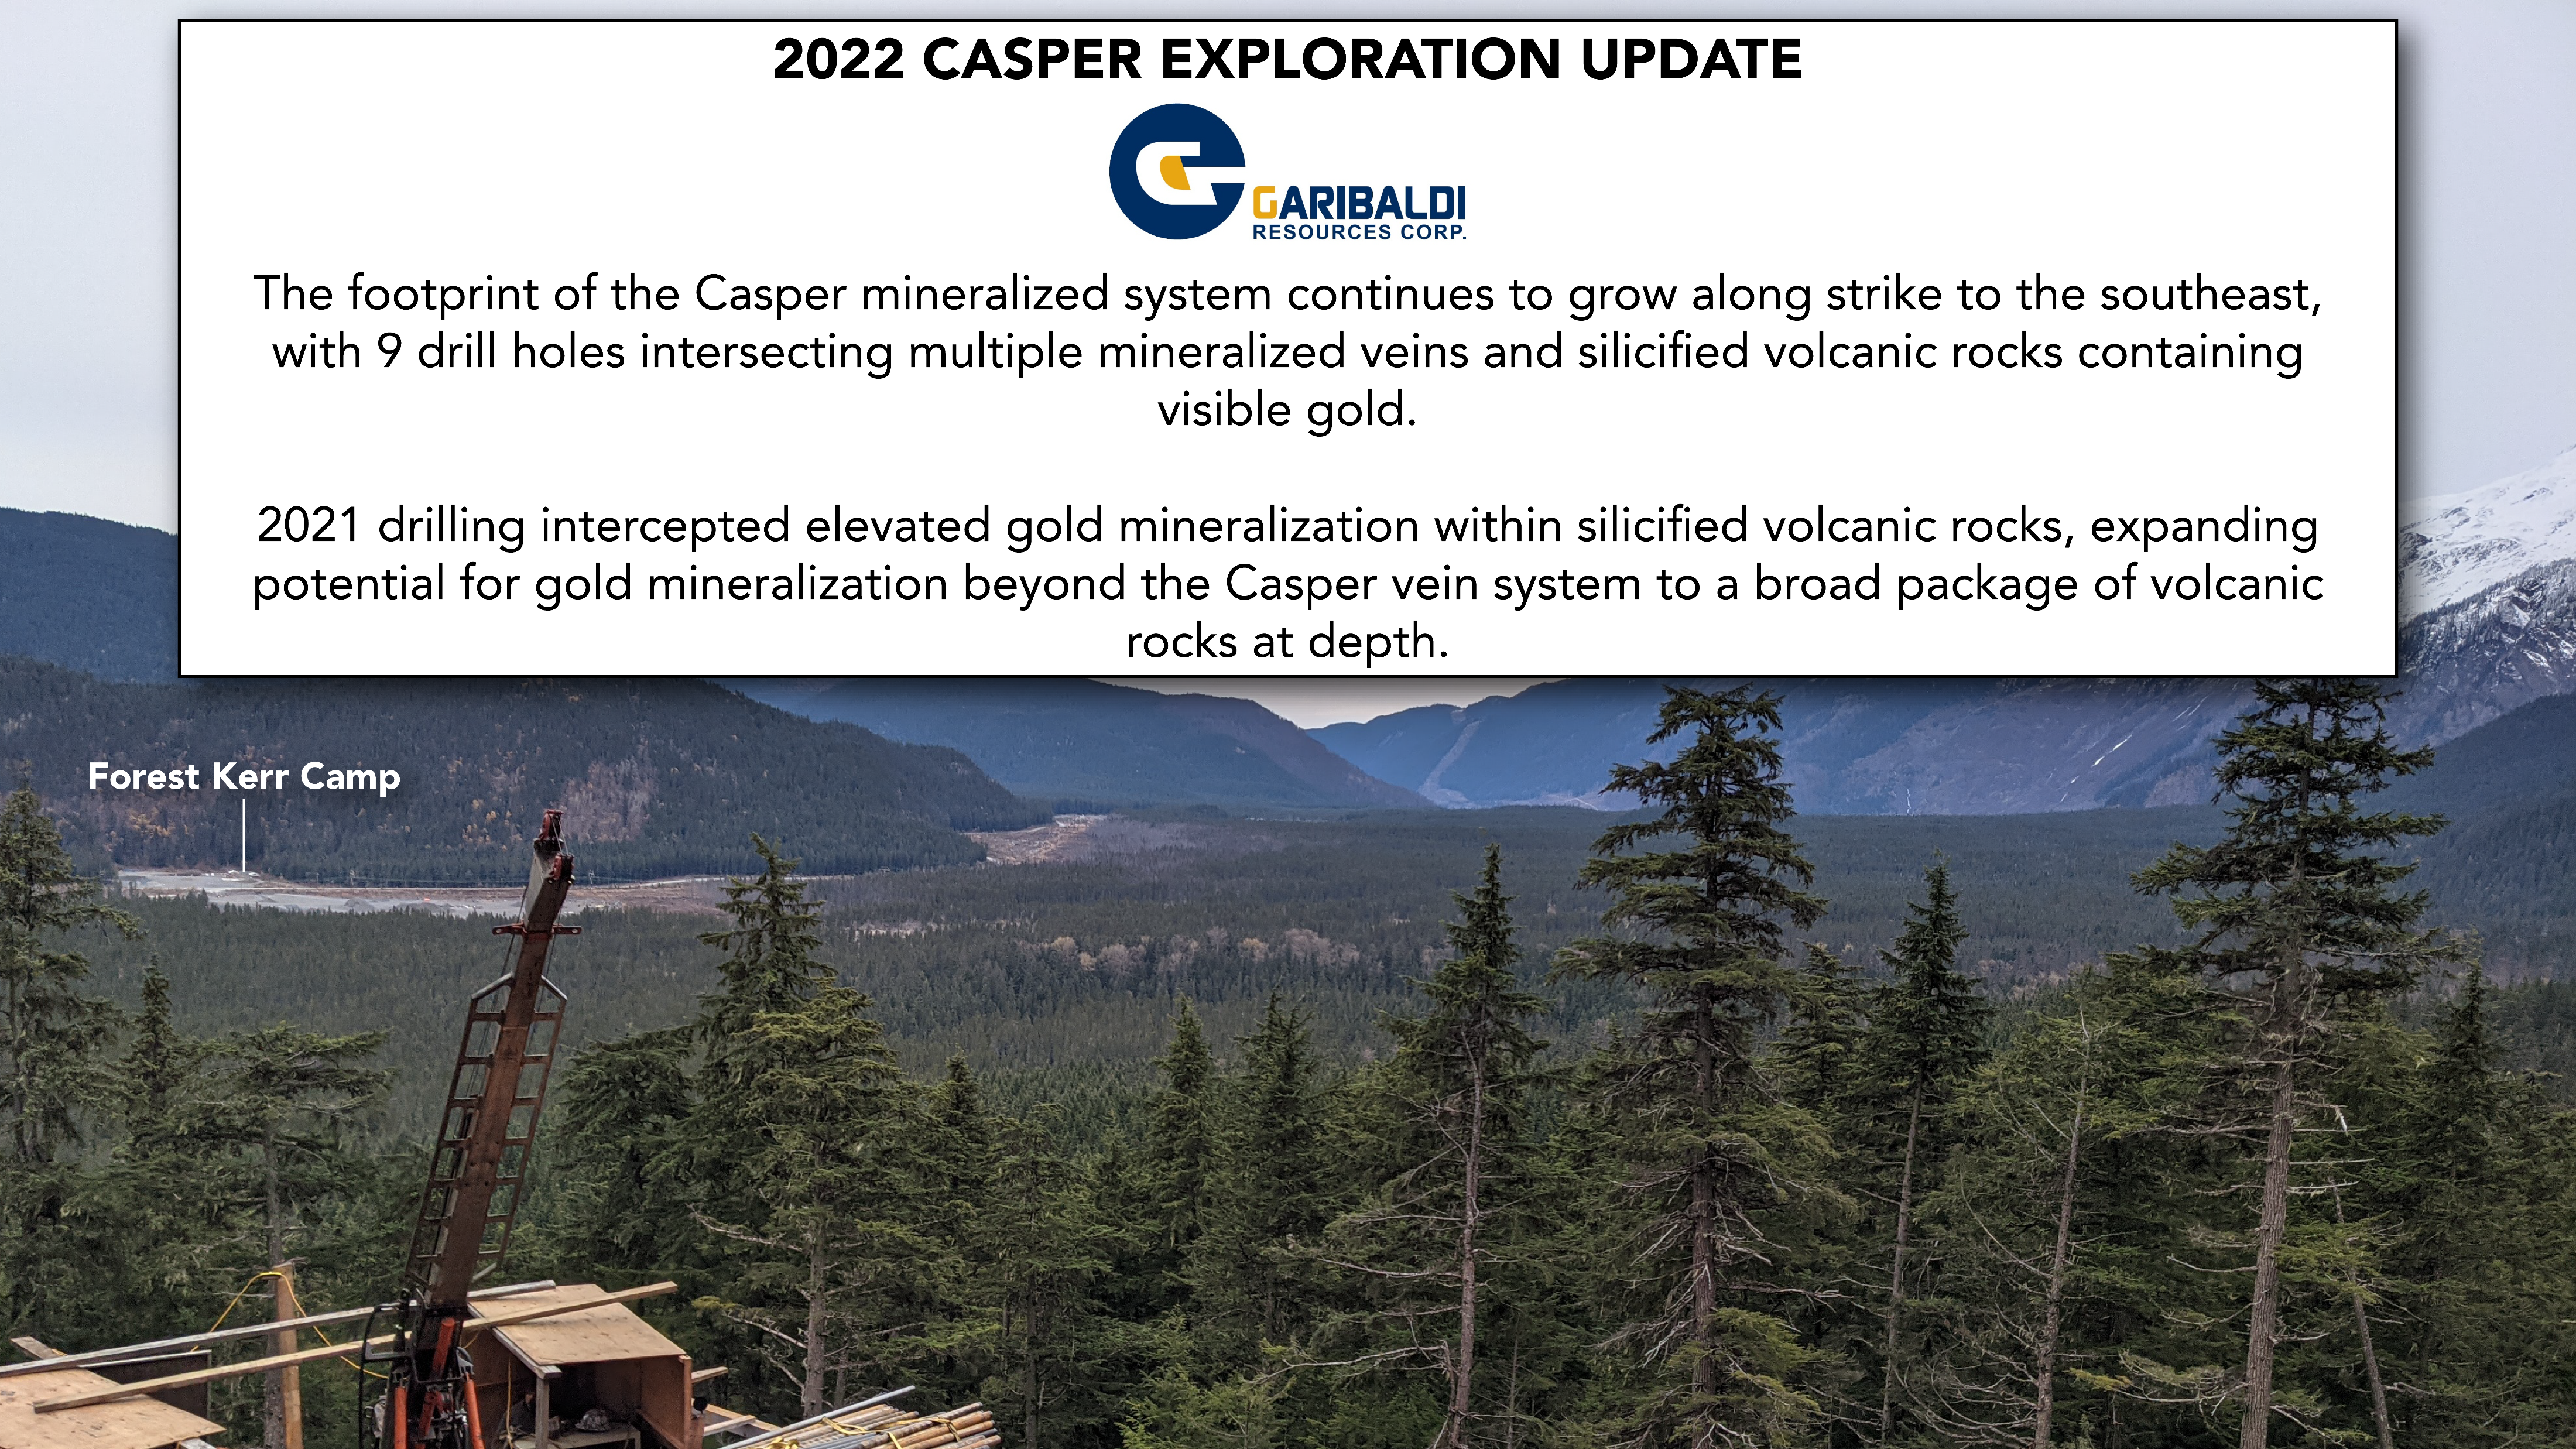 2022 Casper Exploration Update